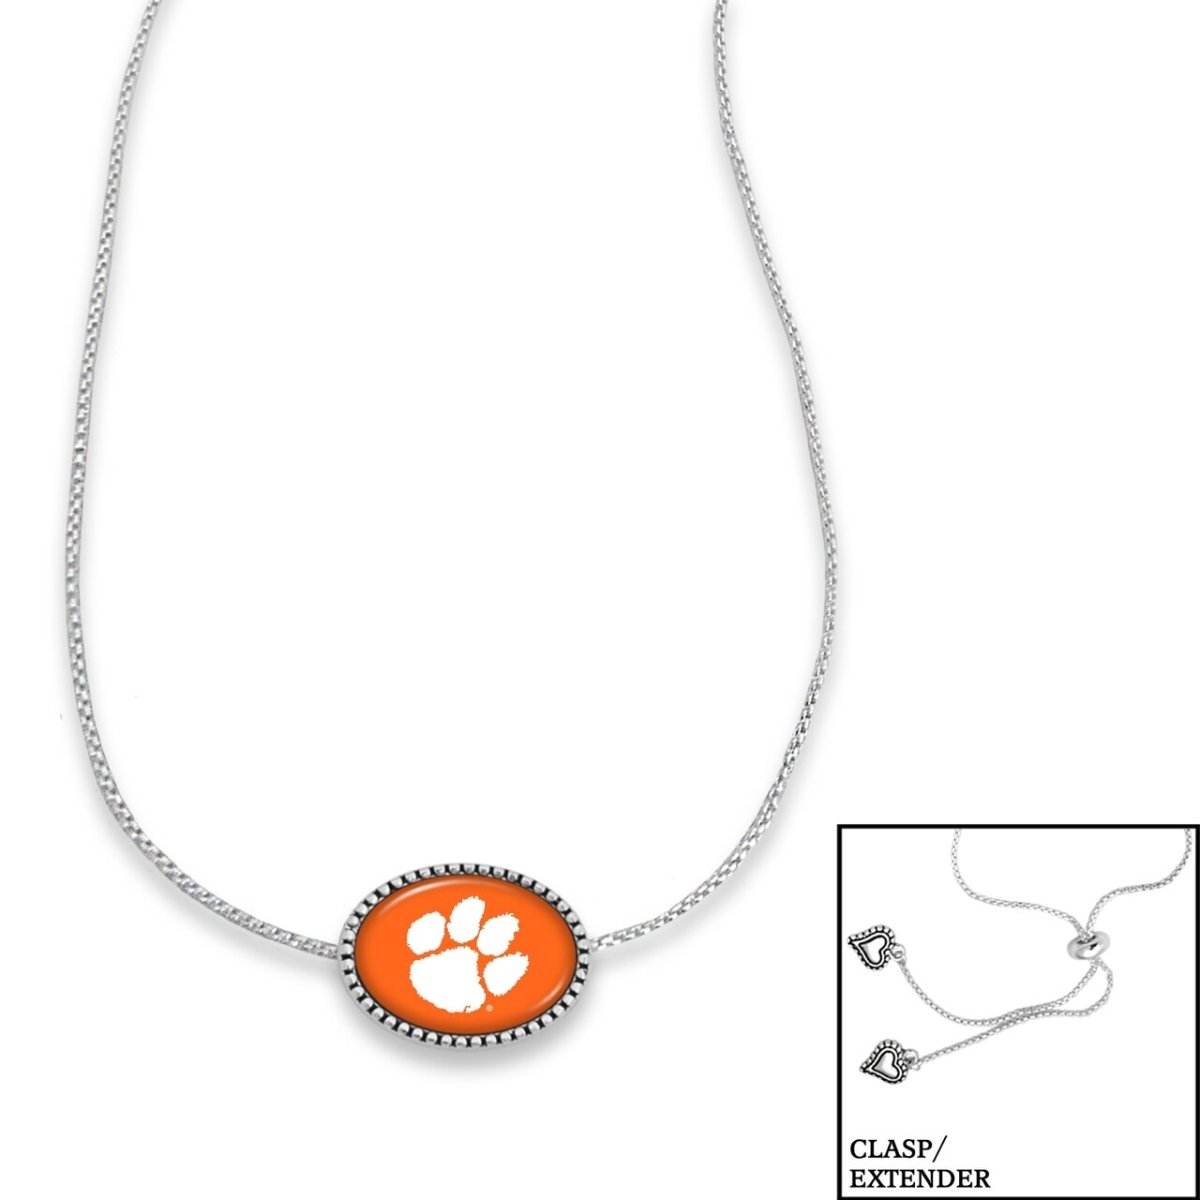 Silver Adjustable Slide Necklace Oval Orange With White Paw - Mr. Knickerbocker